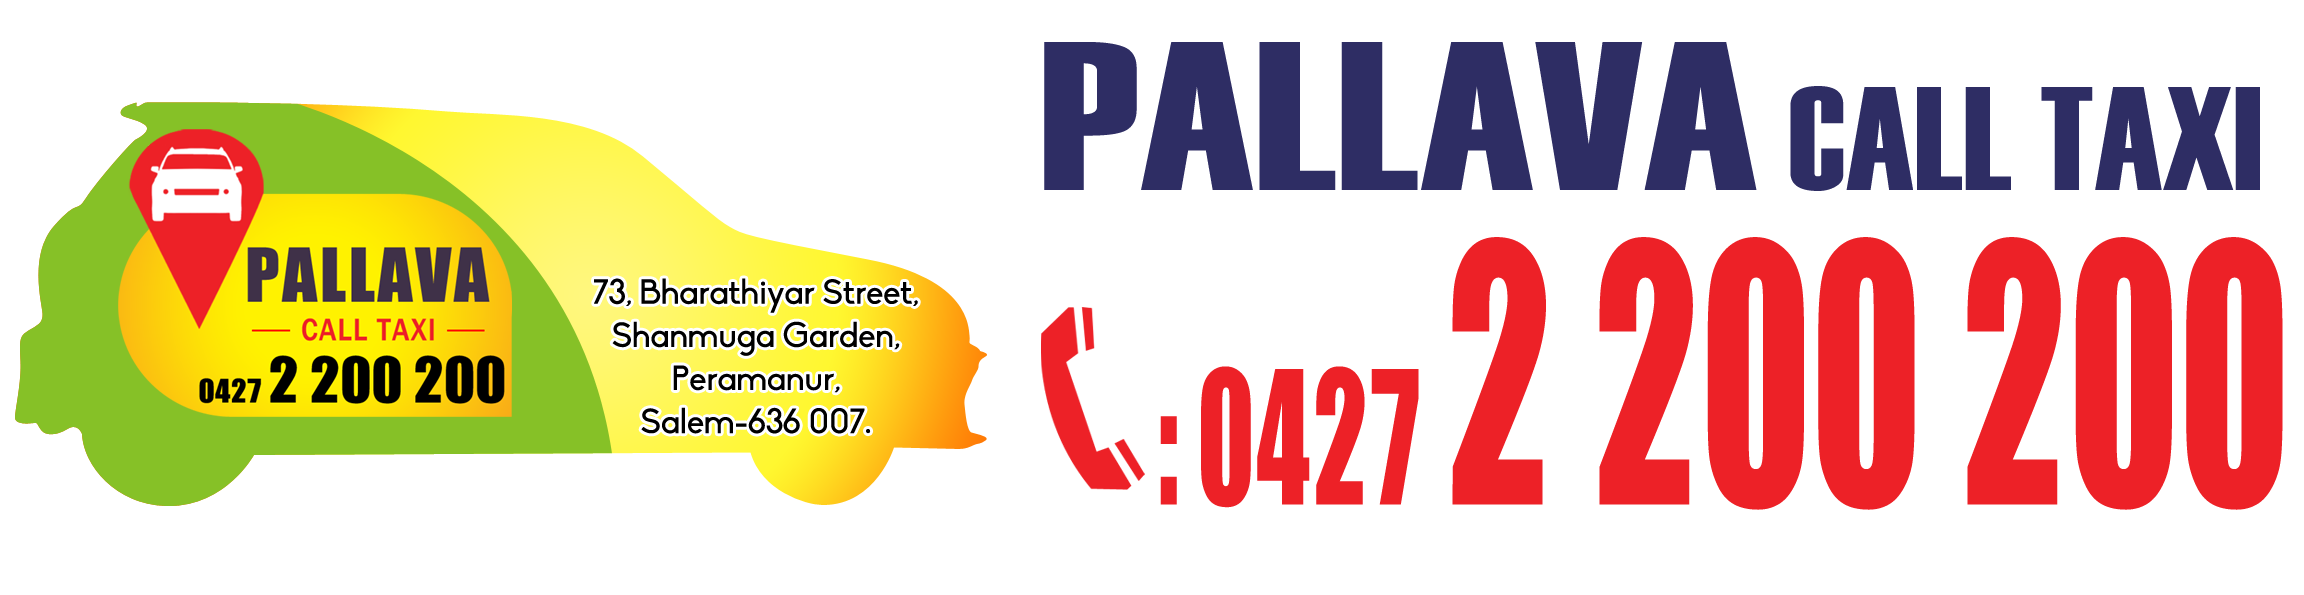 Pallava Call Taxi